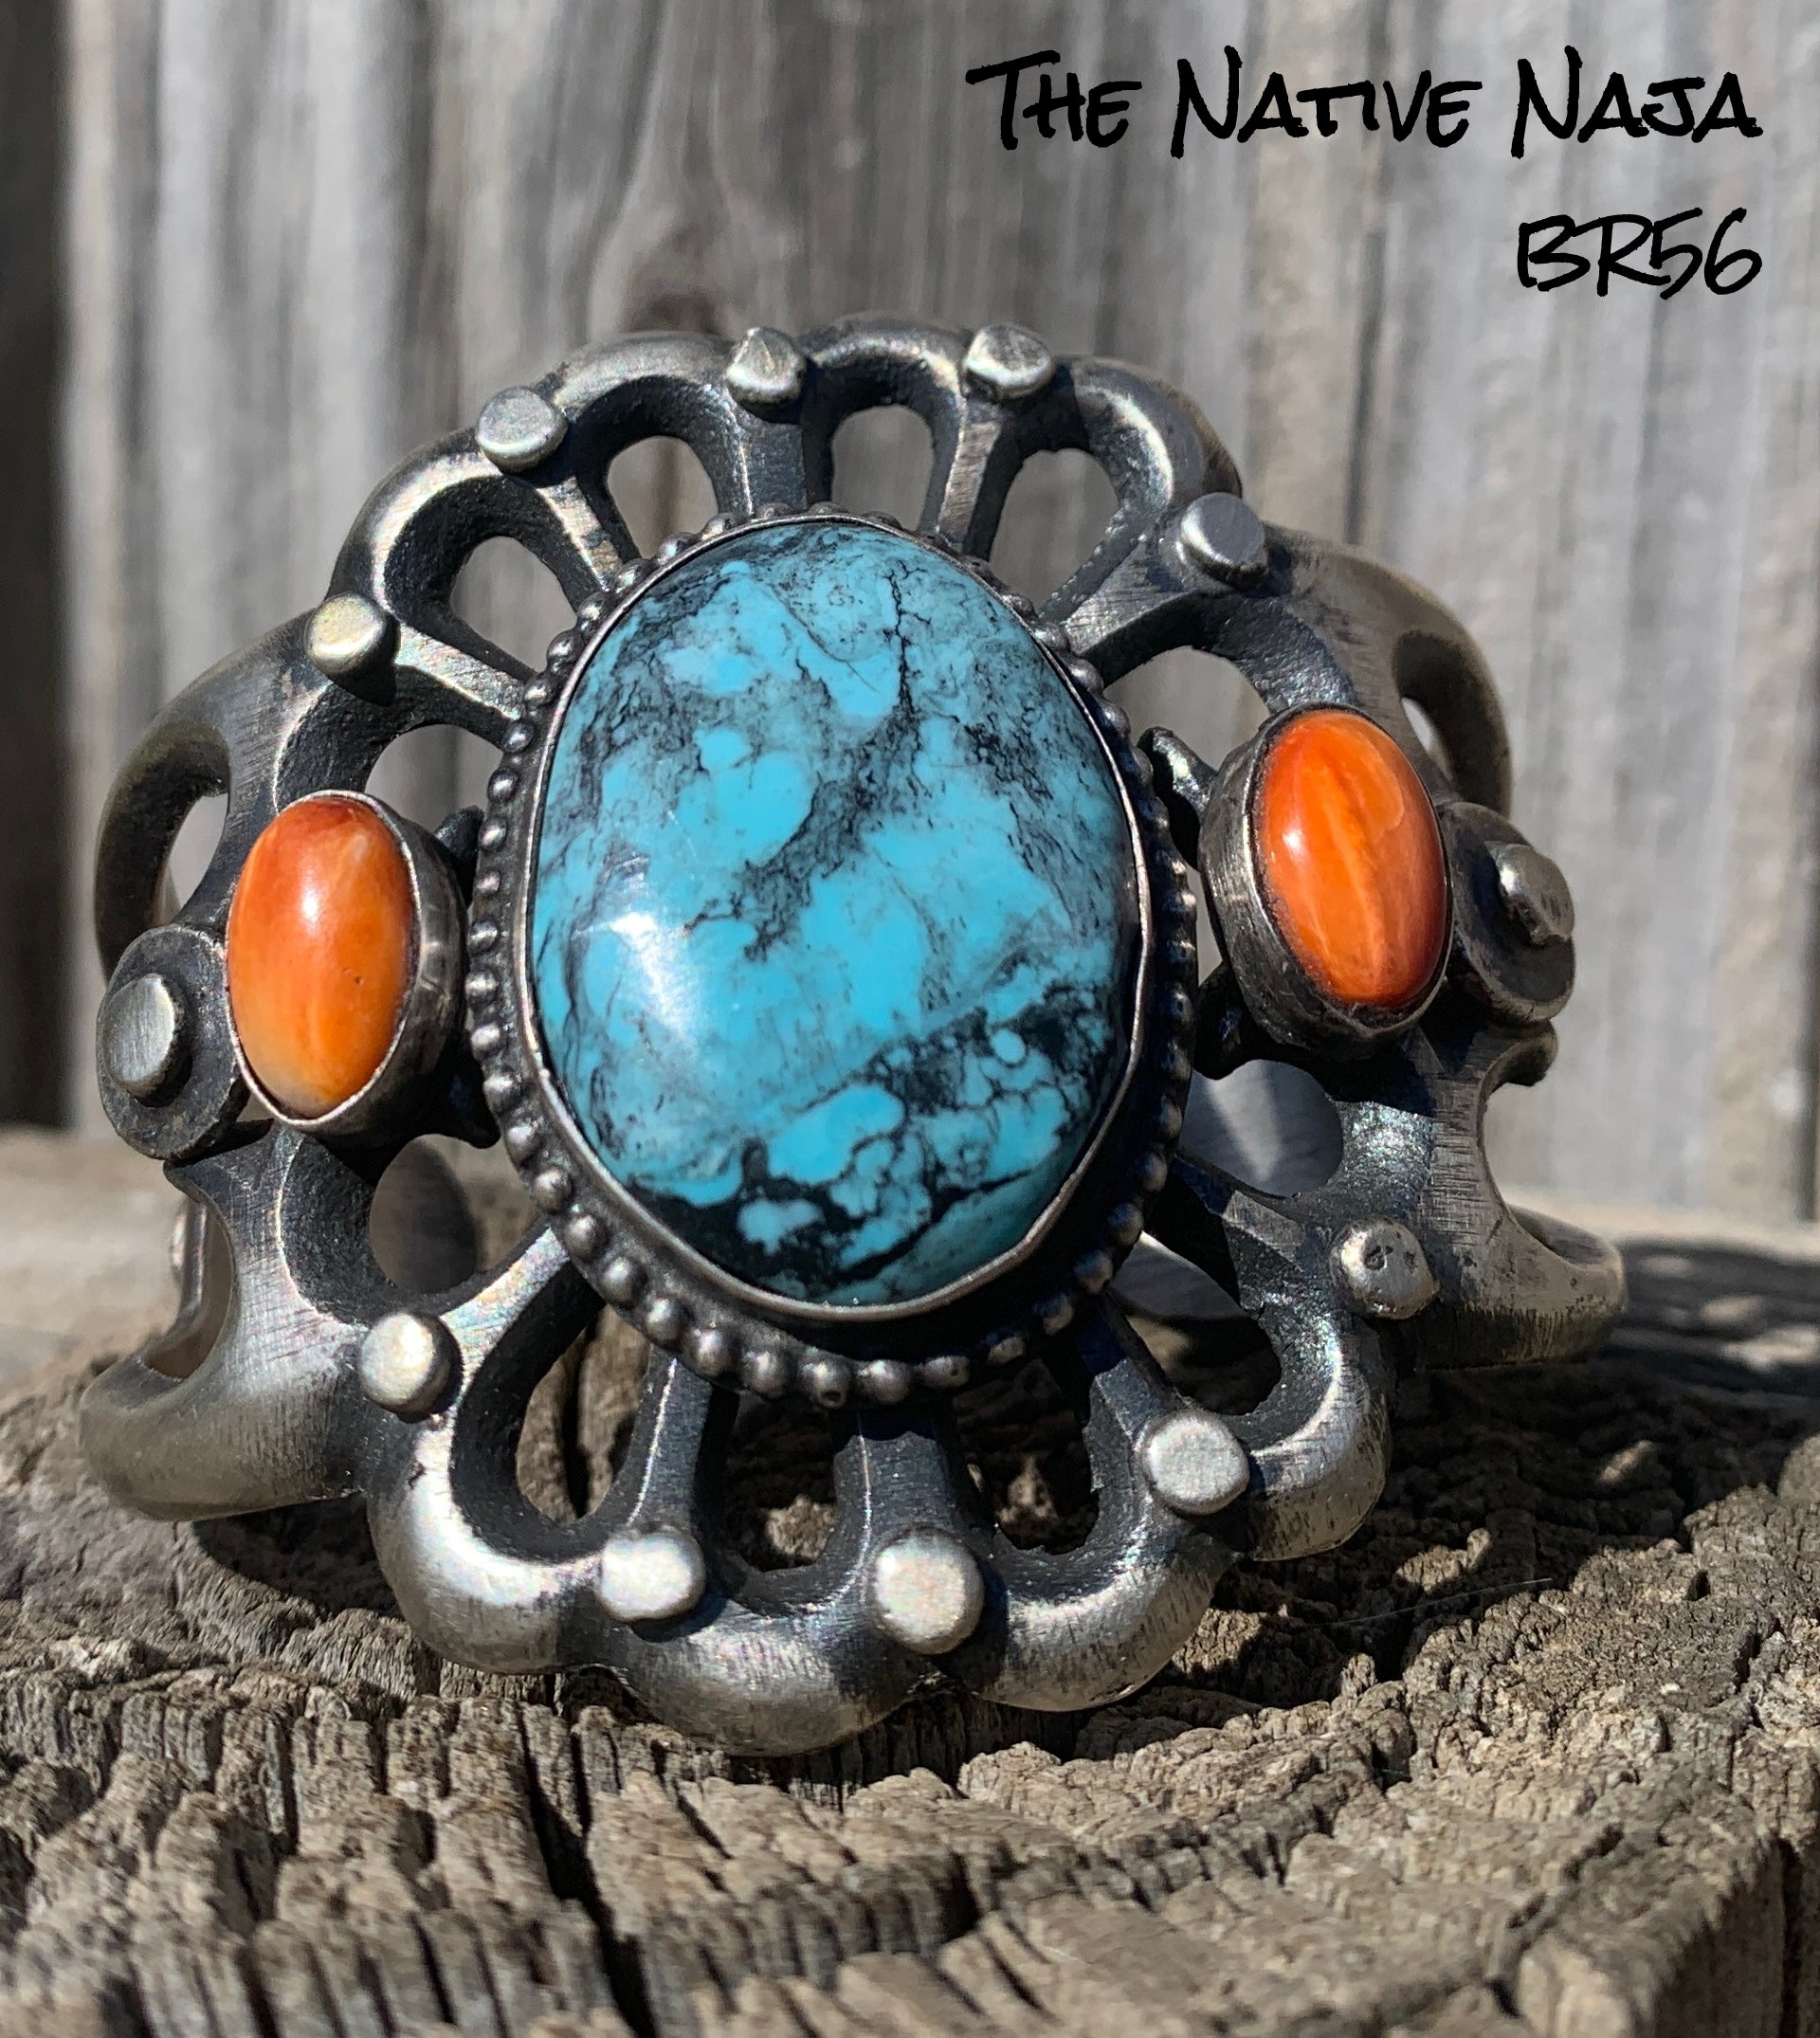 Navajo Chimney Butte Sandcast Sterling Silver, Spiny Oyster & Kingman Turquoise Cuff Bracelet BR56